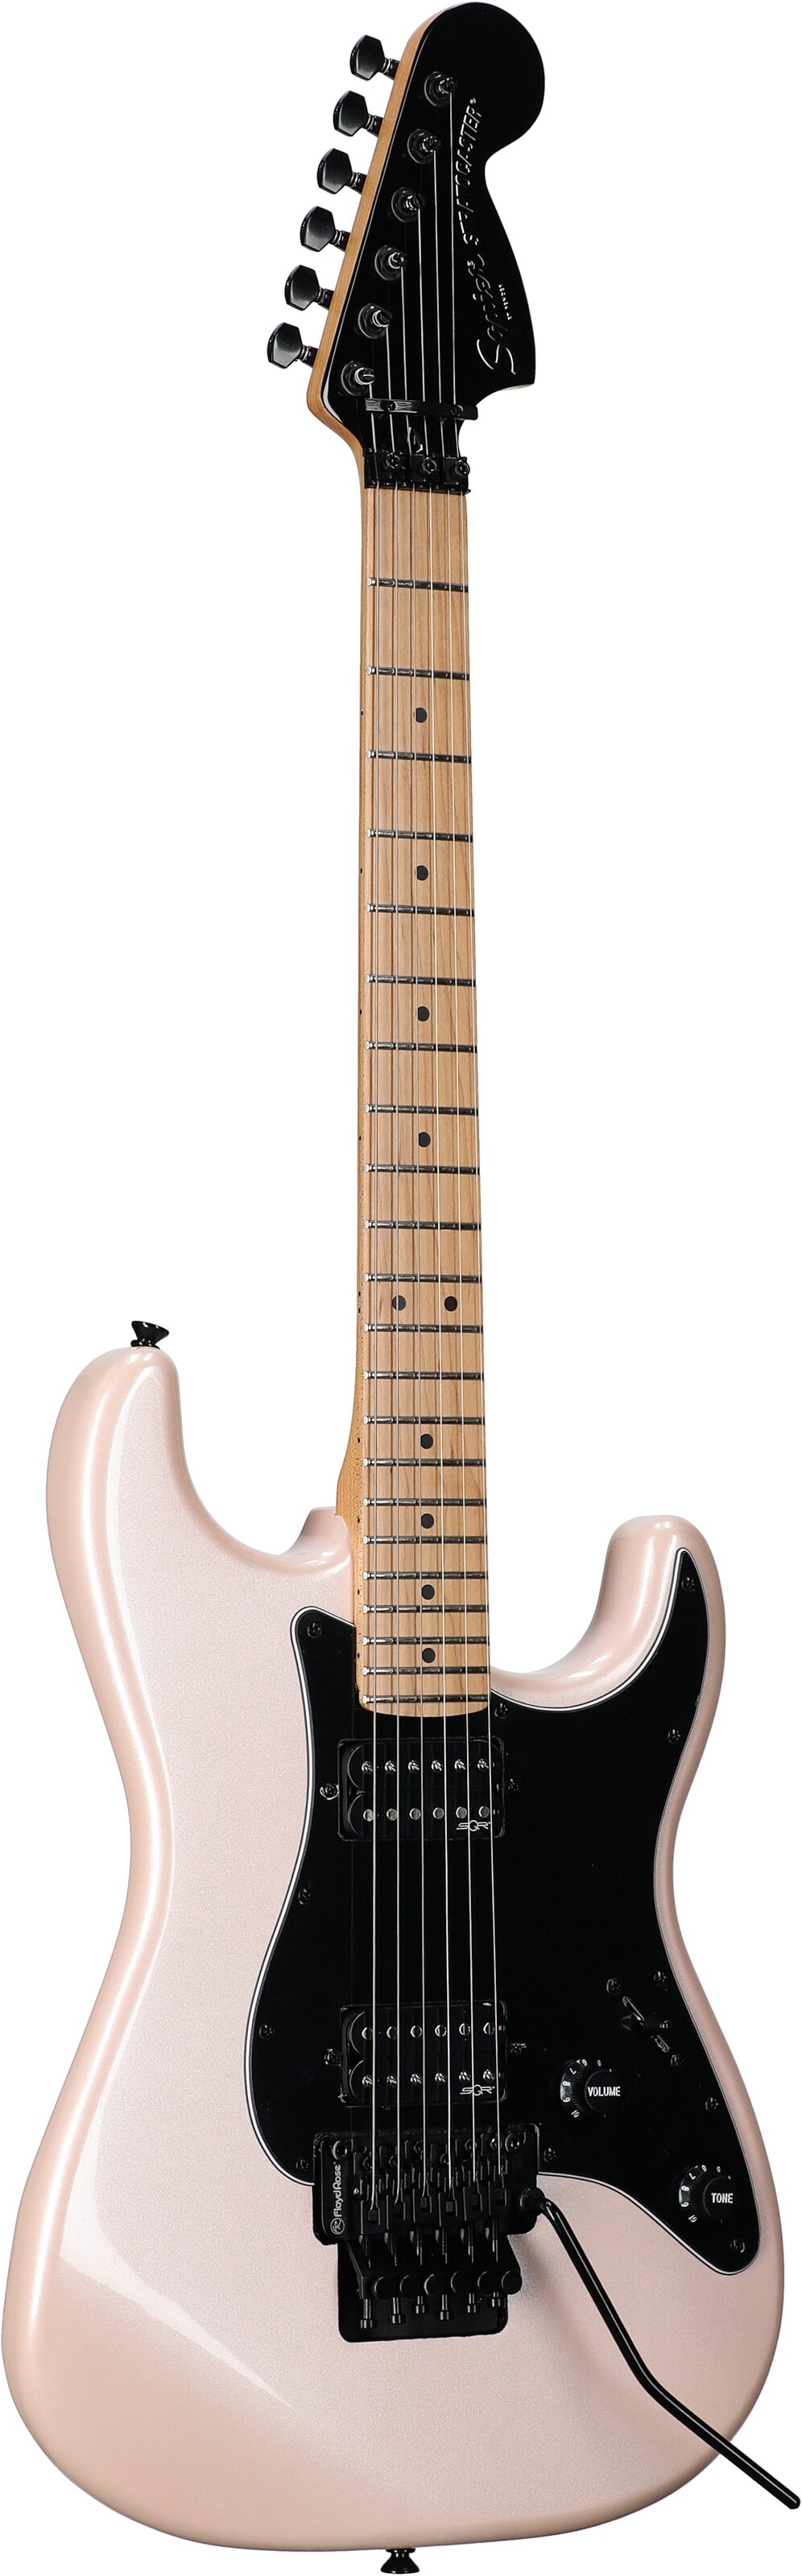 Squier Contemporary Stratocaster HH FR Electric Guitar | zZounds